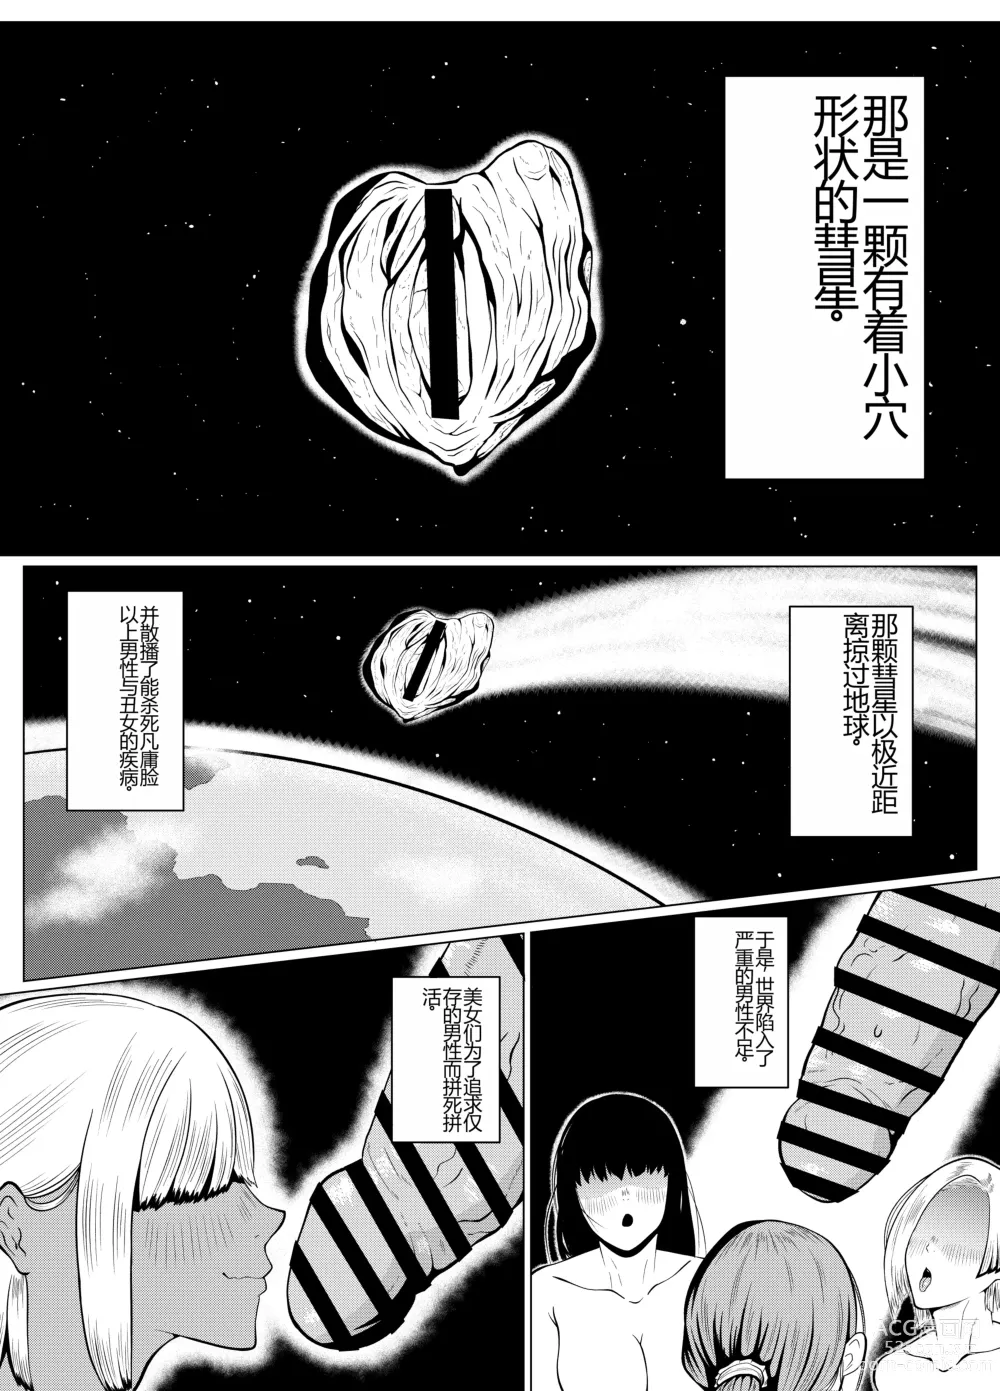 Page 3 of doujinshi Jakushadansei 1: Bijo 9 no sekai